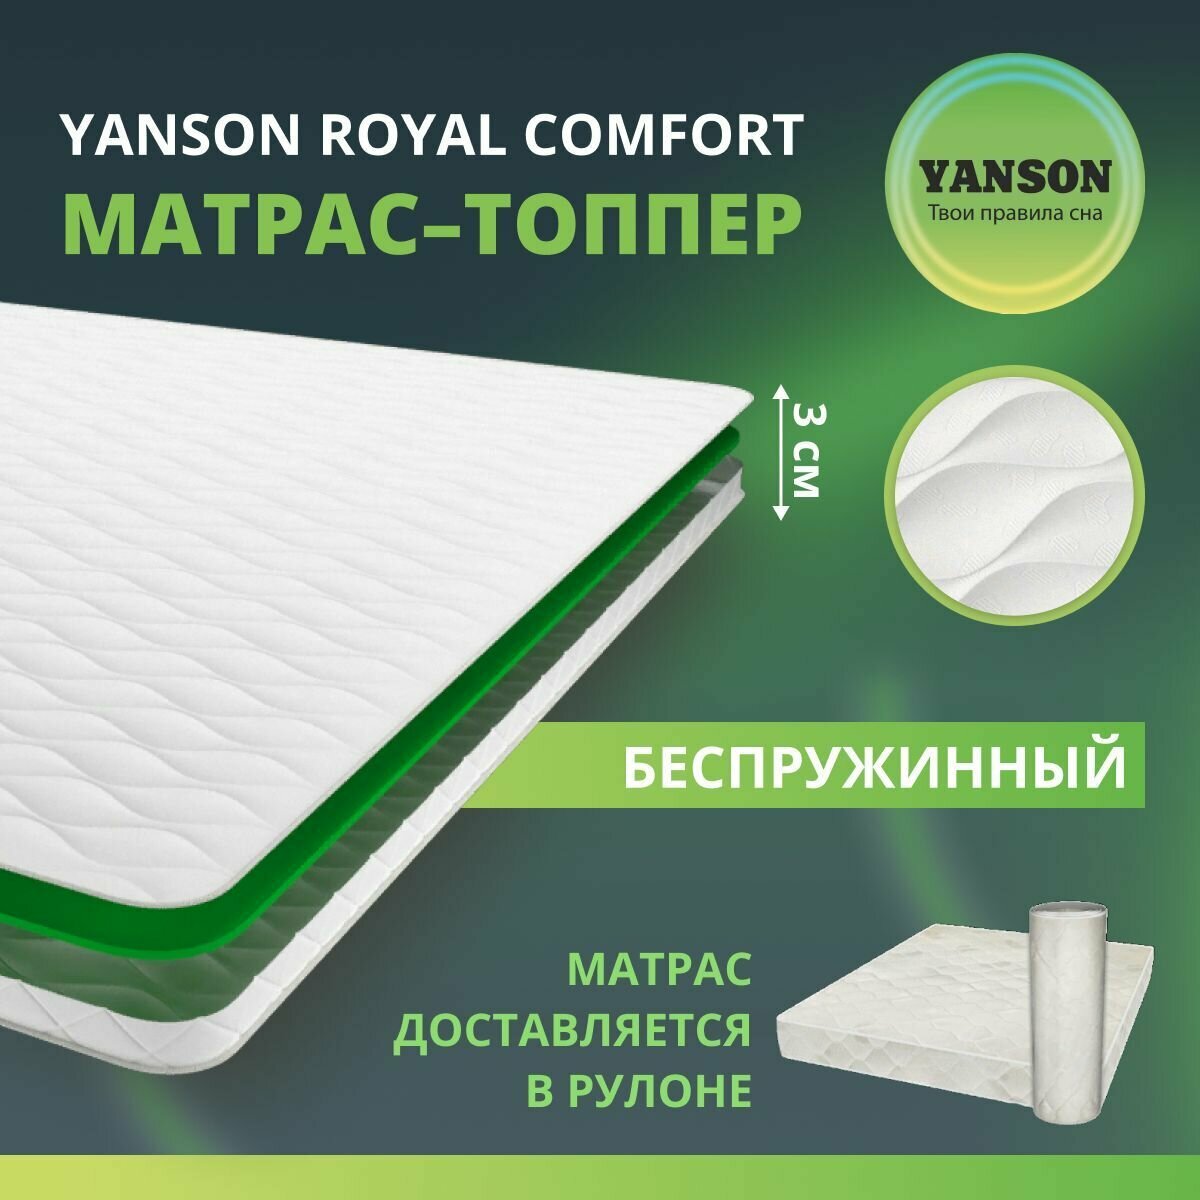 YANSON Royal Comfort 110-200